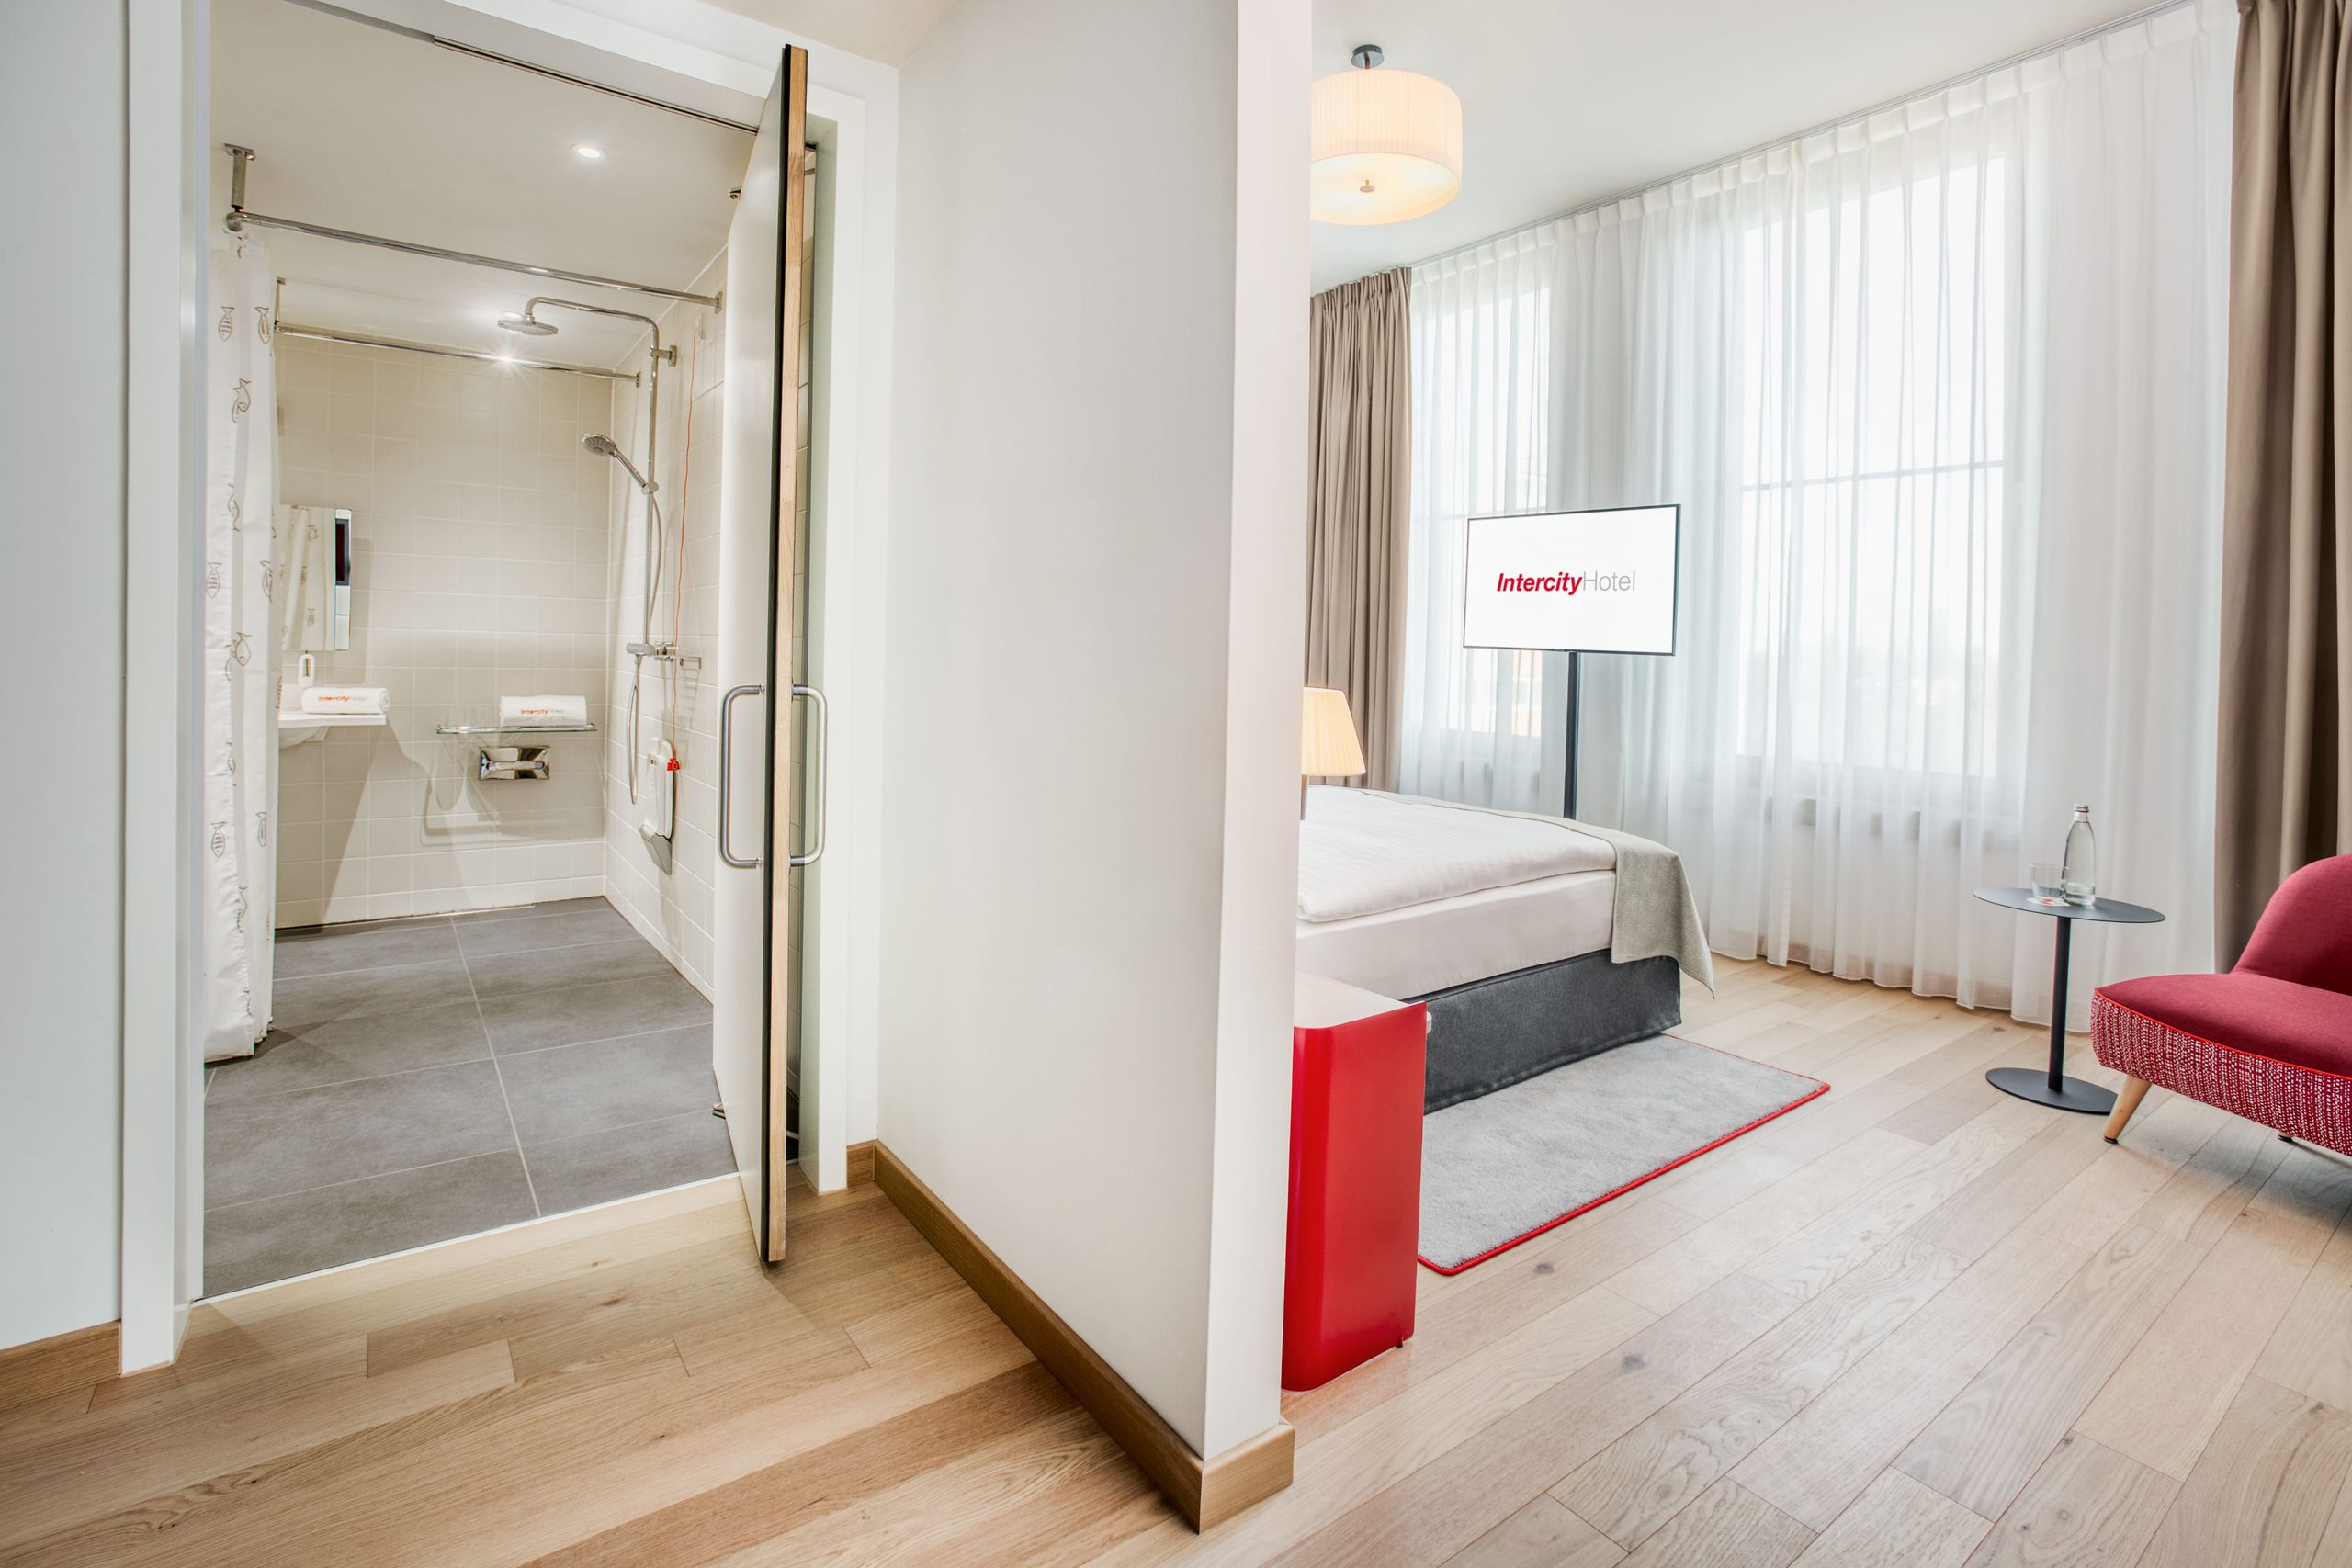 IntercityHotel Hamburg-Barmbek - Behindertengerechtes Zimmers